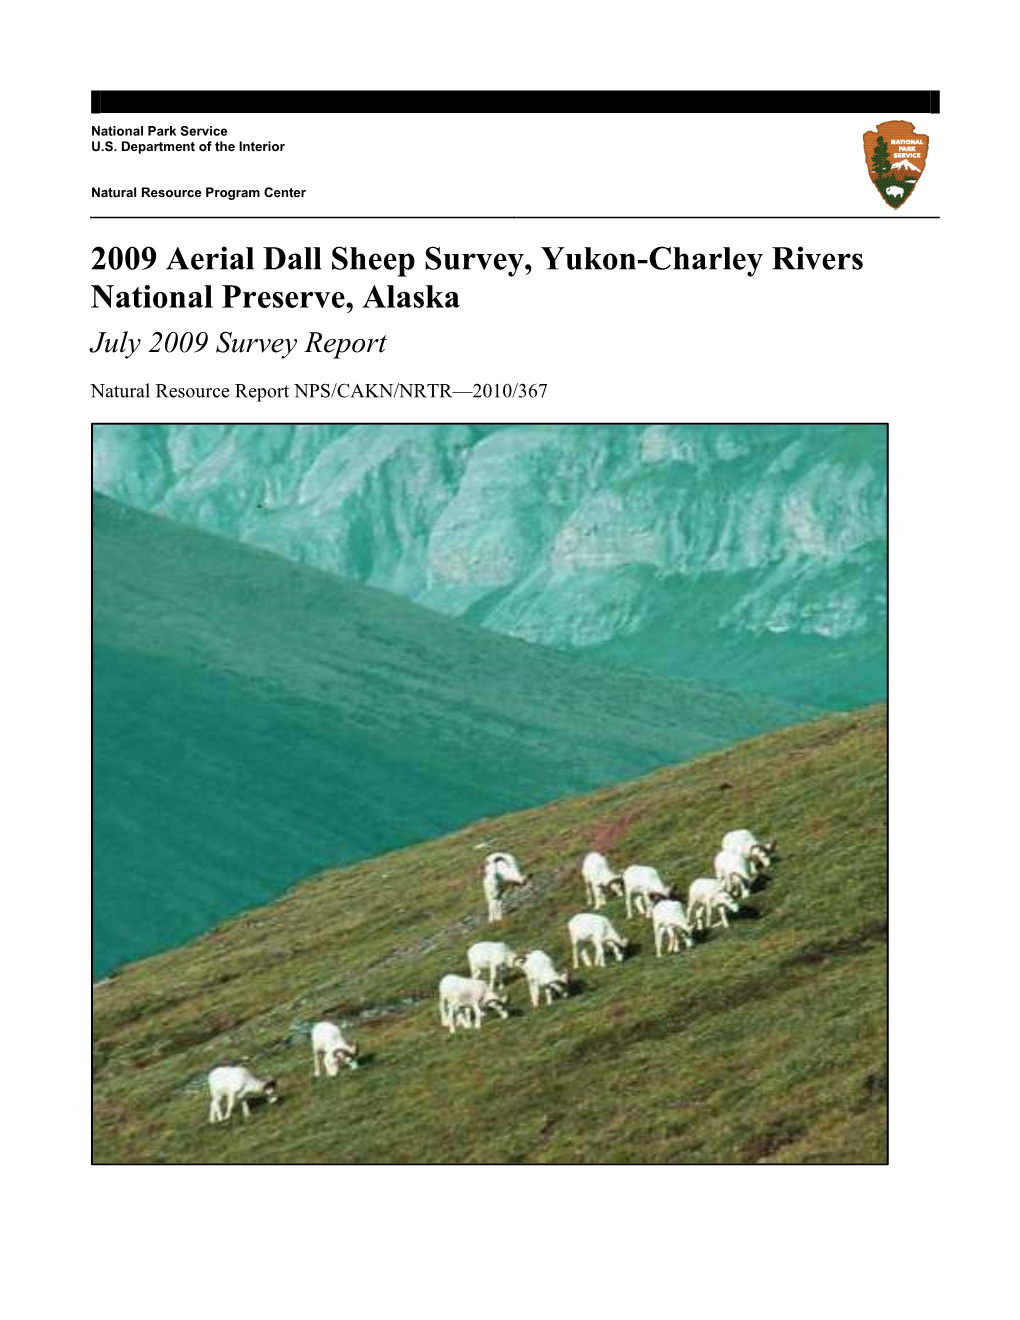 2009 Aerial Dall Sheep Survey, Yukon-Charley Rivers National Preserve, Alaska July 2009 Survey Report